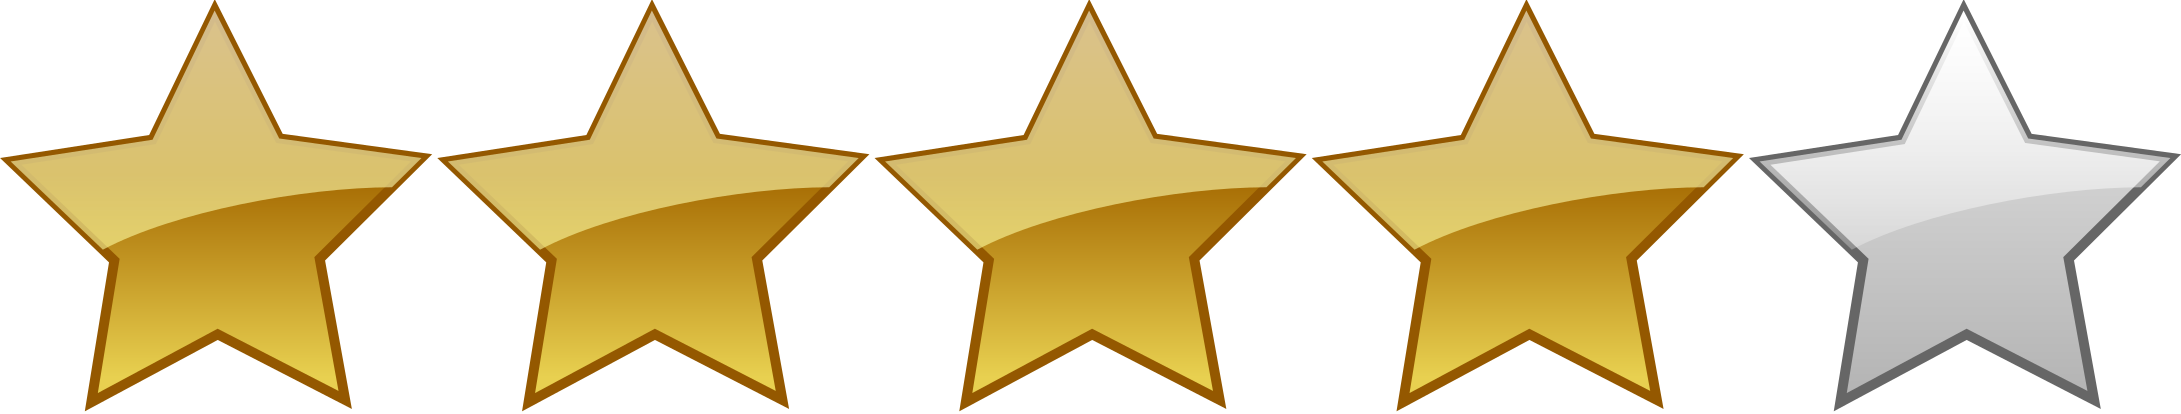 Rating - 4 Stars